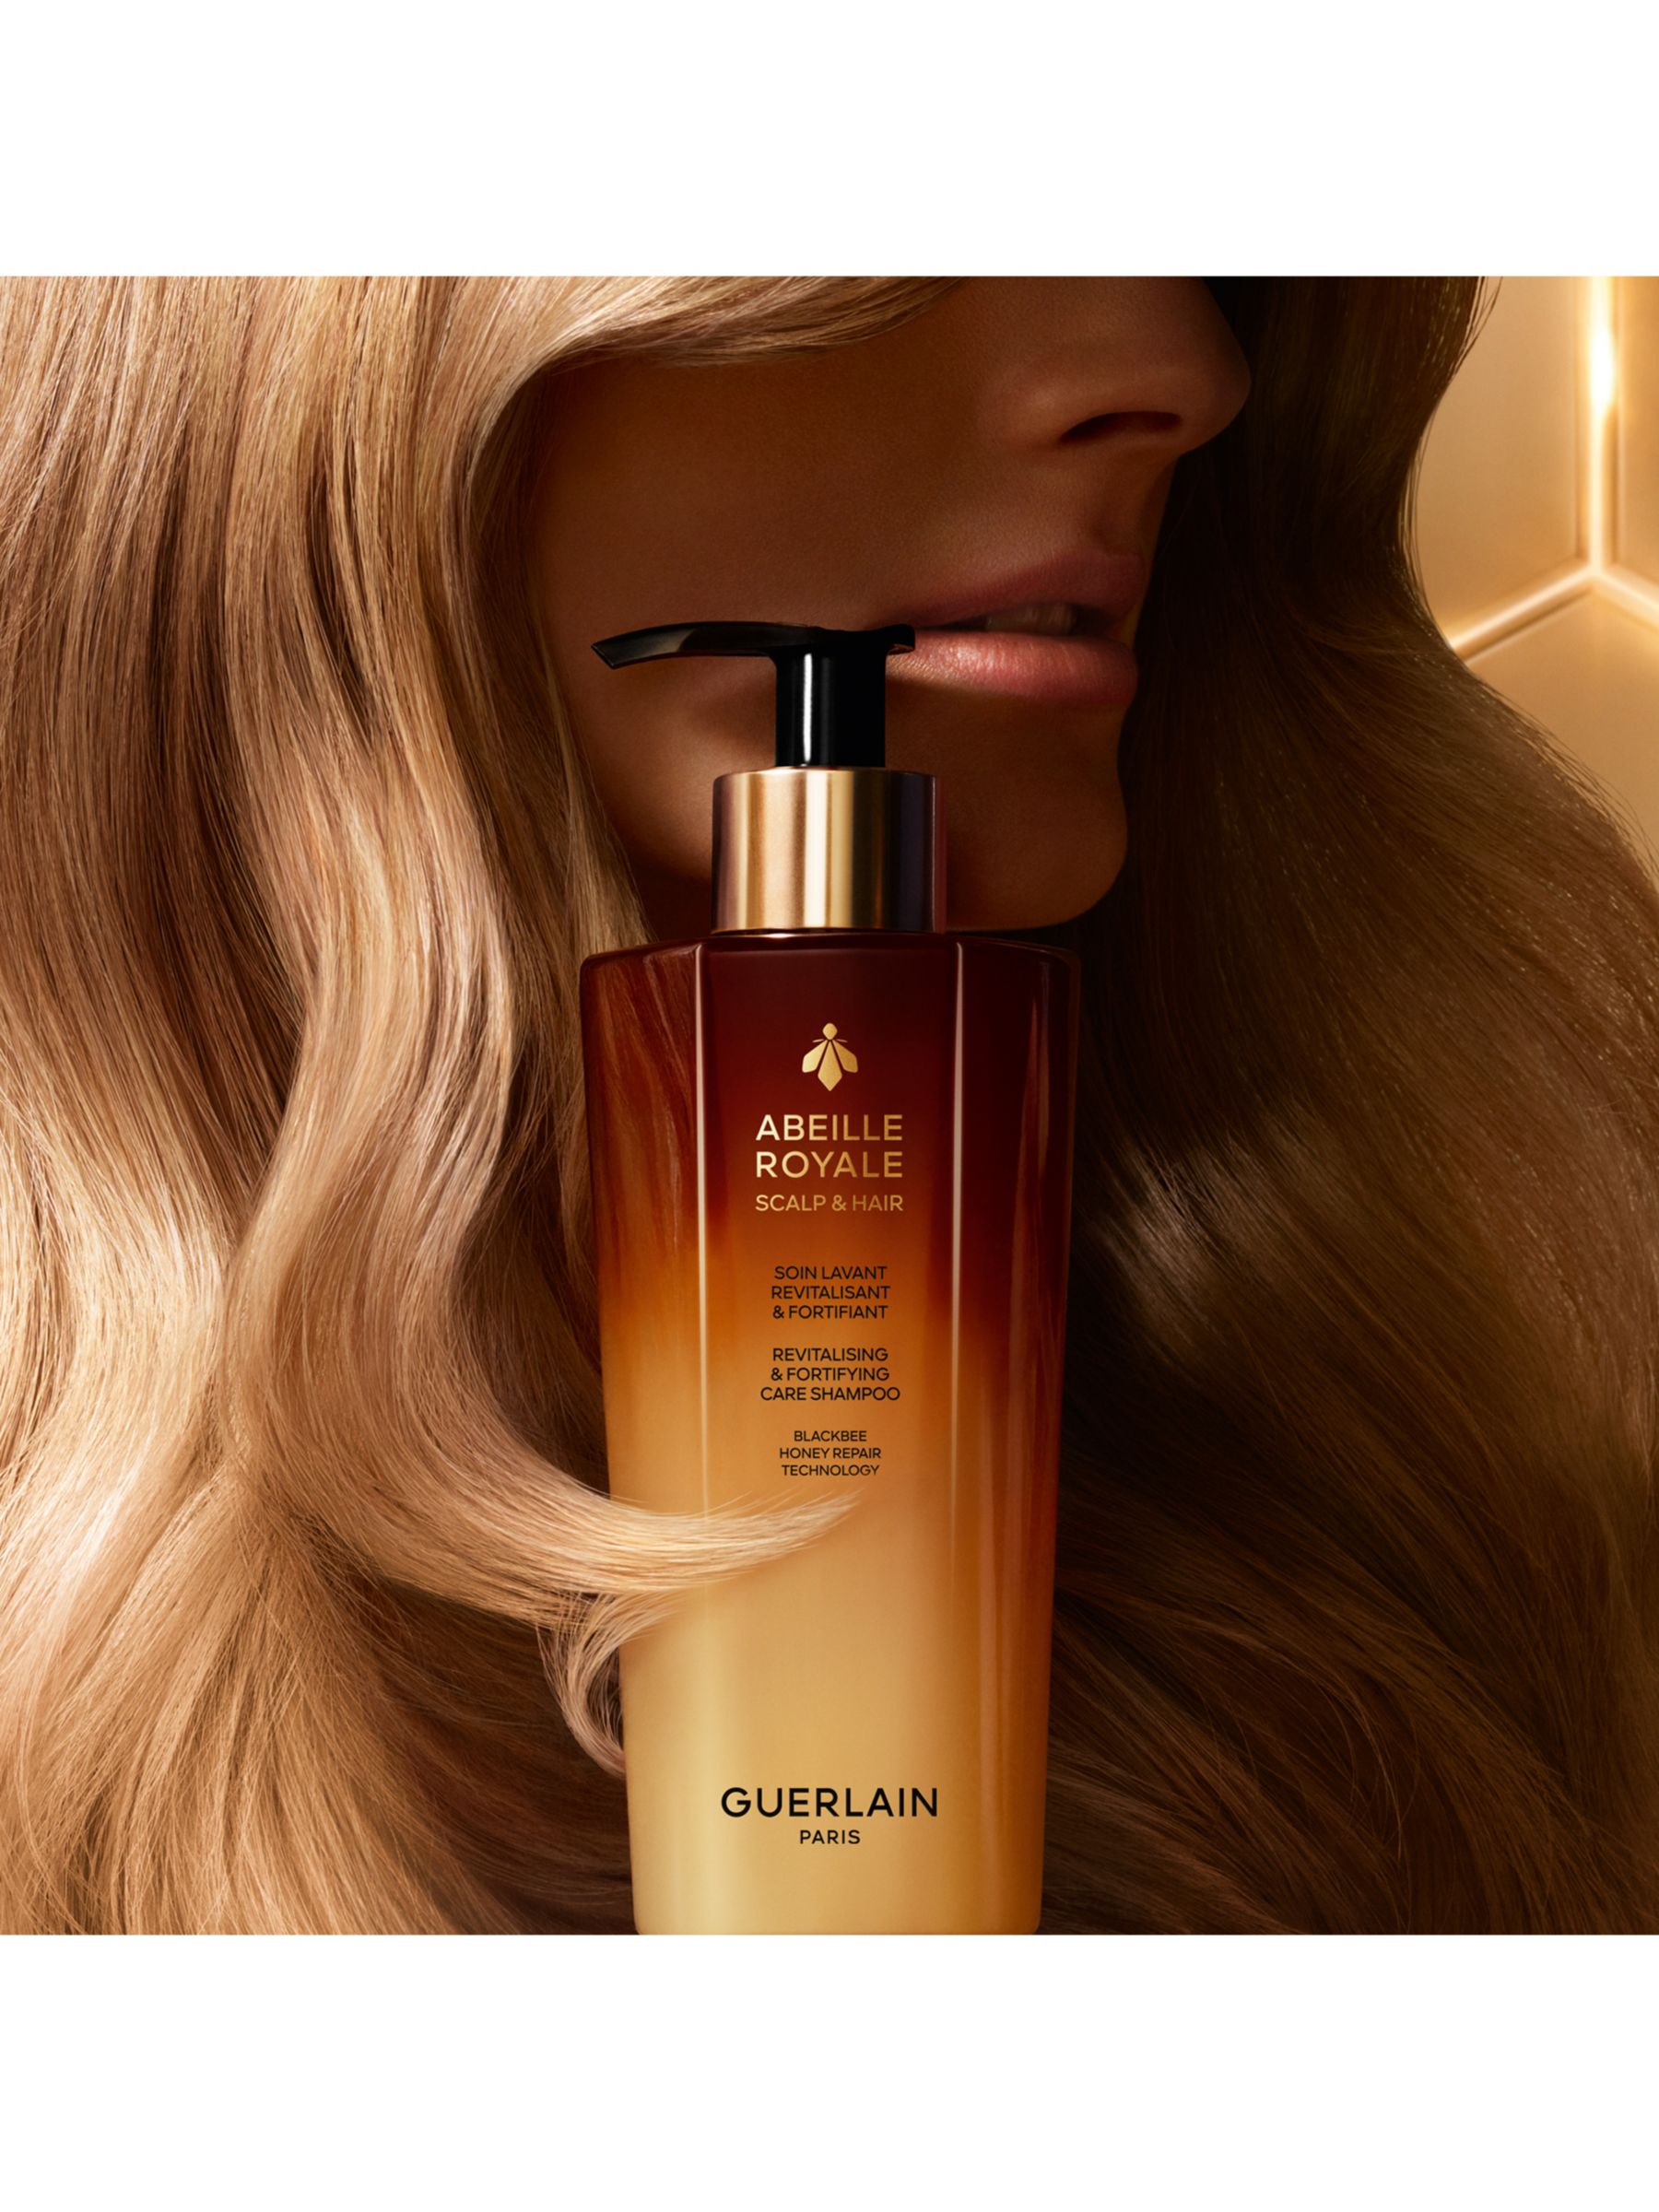 Guerlain Abeille Royale Scalp & Hair Revitalising & Fortifying Care Shampoo, 290ml 4